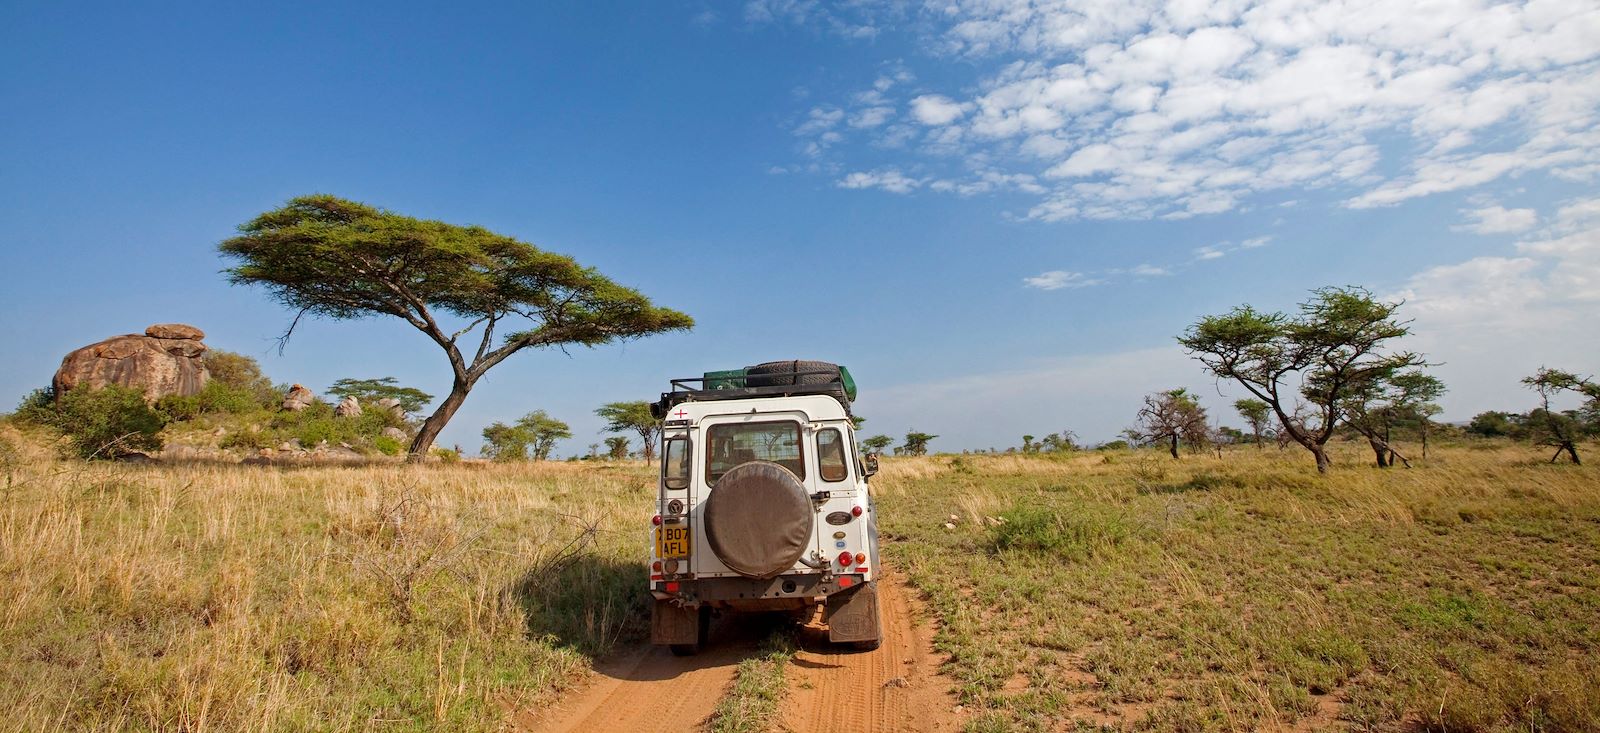 Voyage roadtrip - La Tanzanie sans compromis !